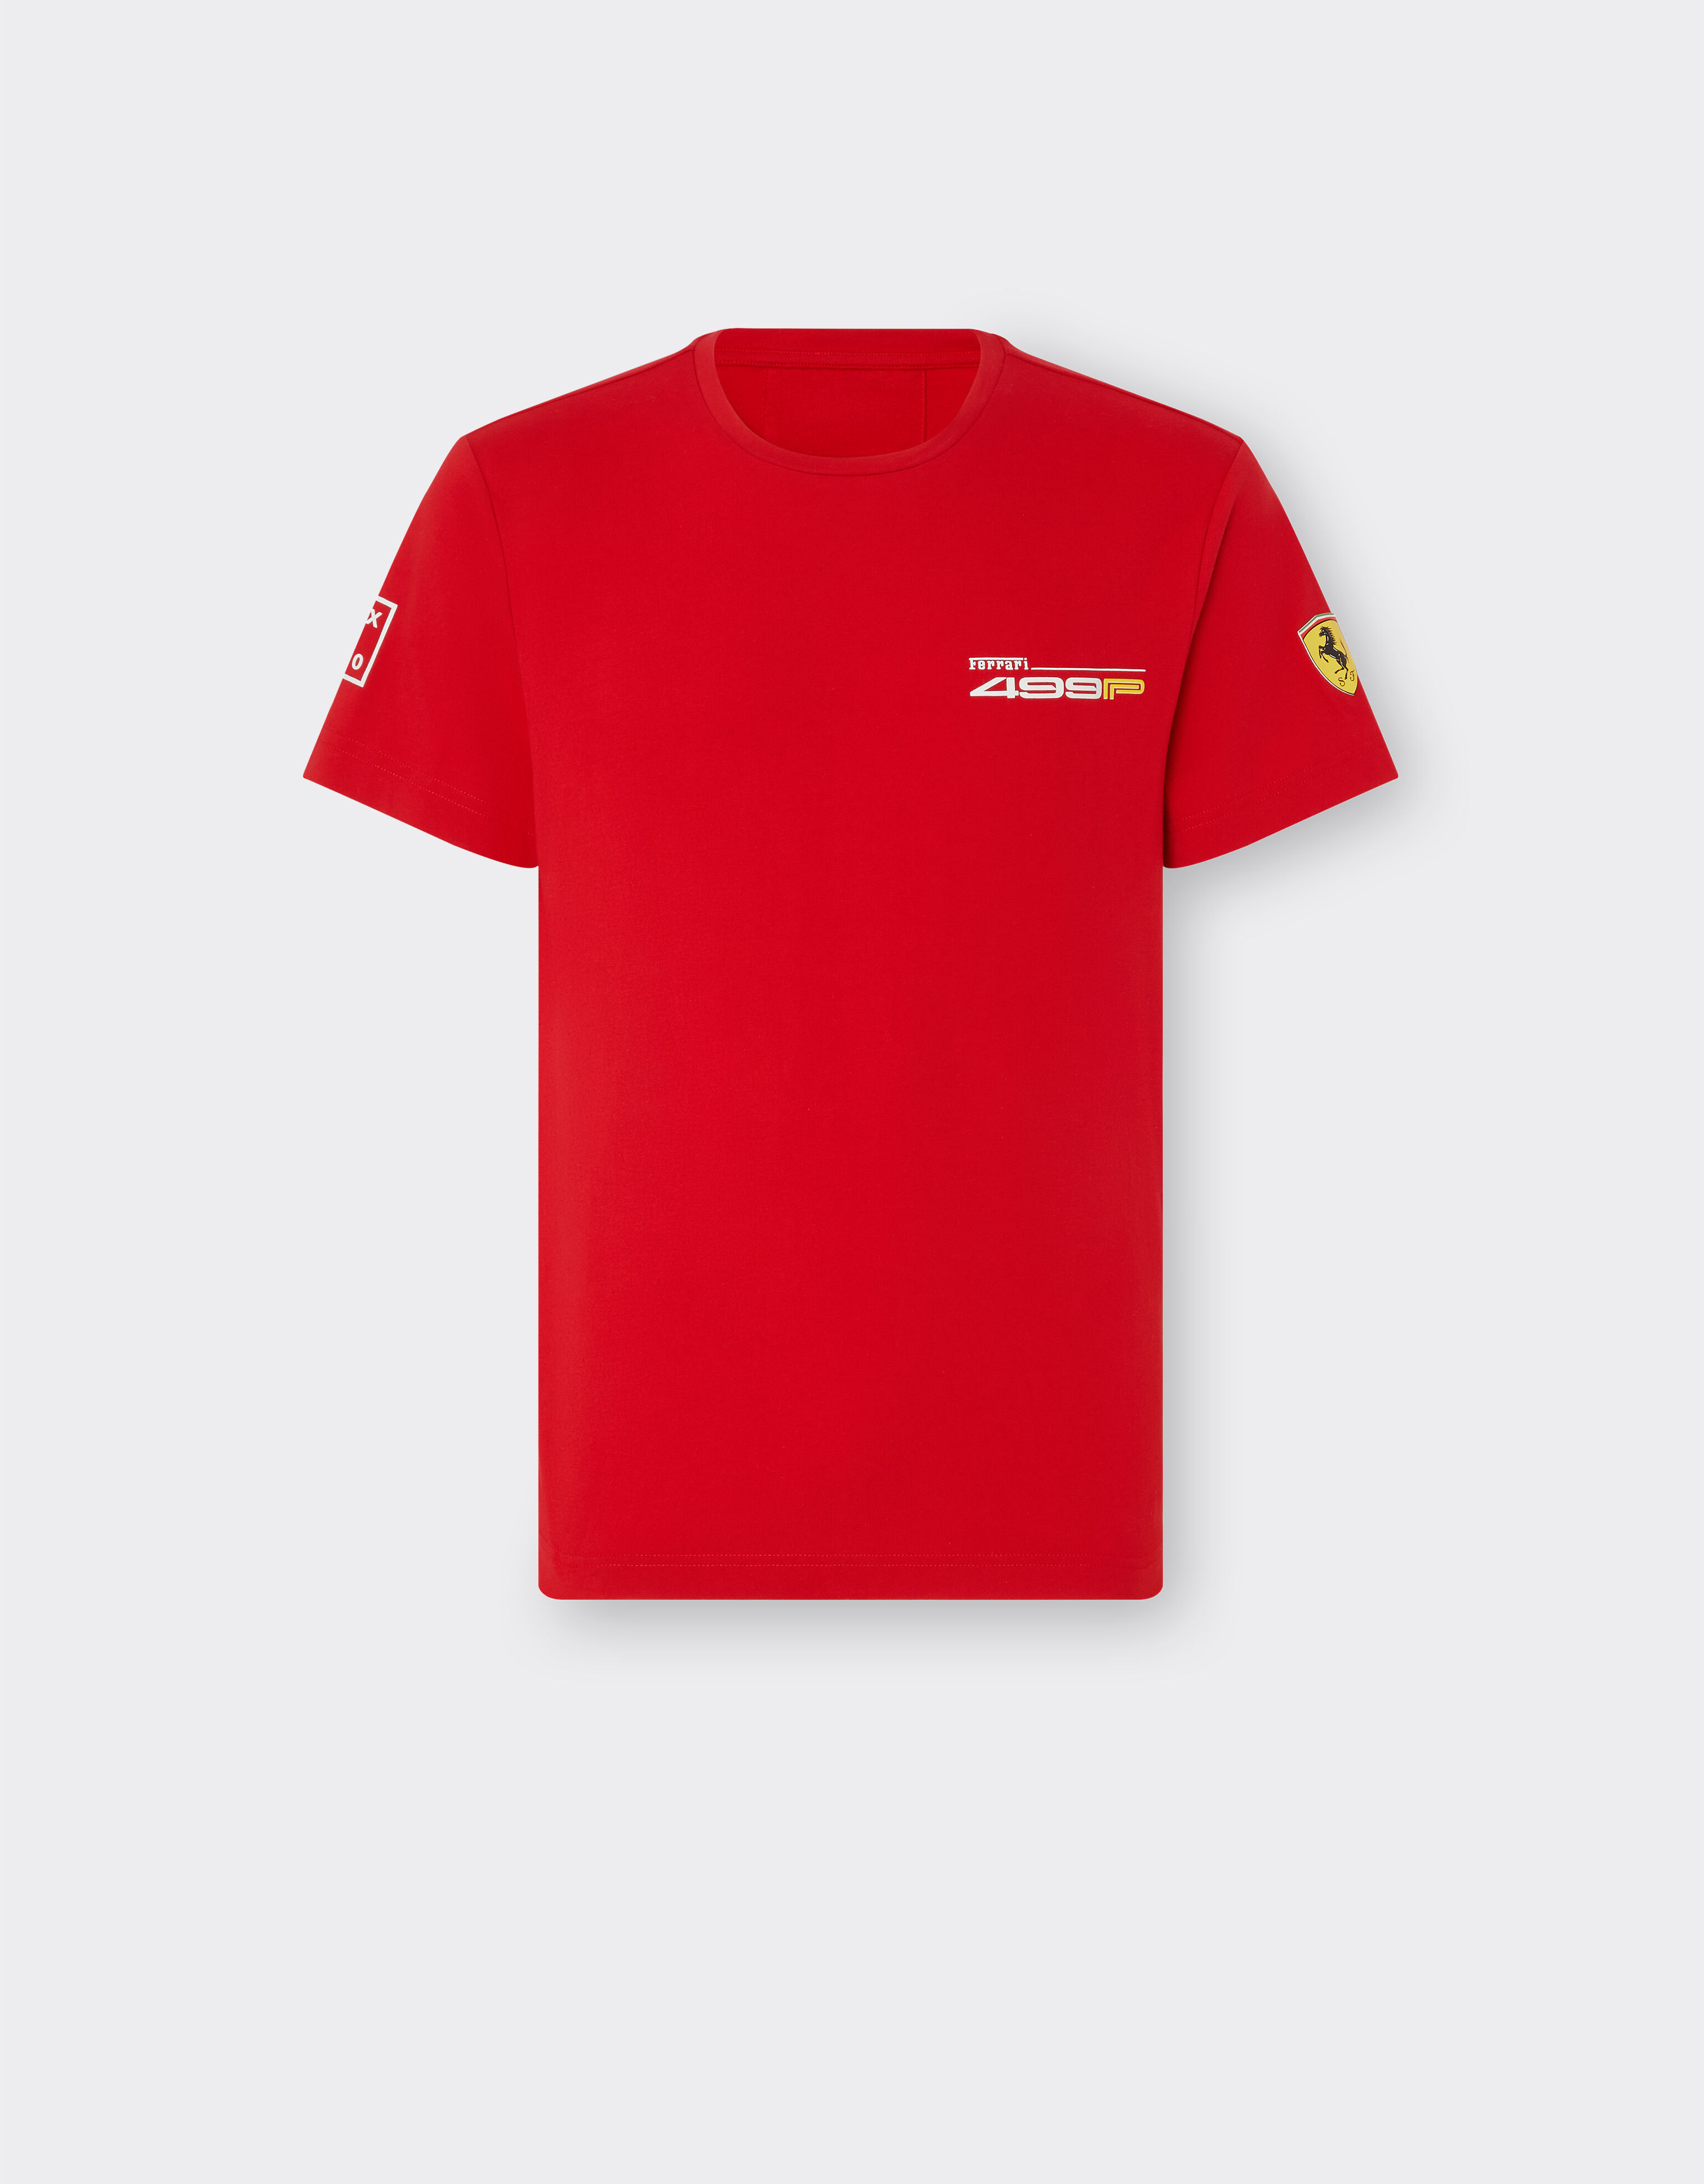 Ferrari T-shirt Ferrari Hypercar 499P Rosso Corsa F1338f